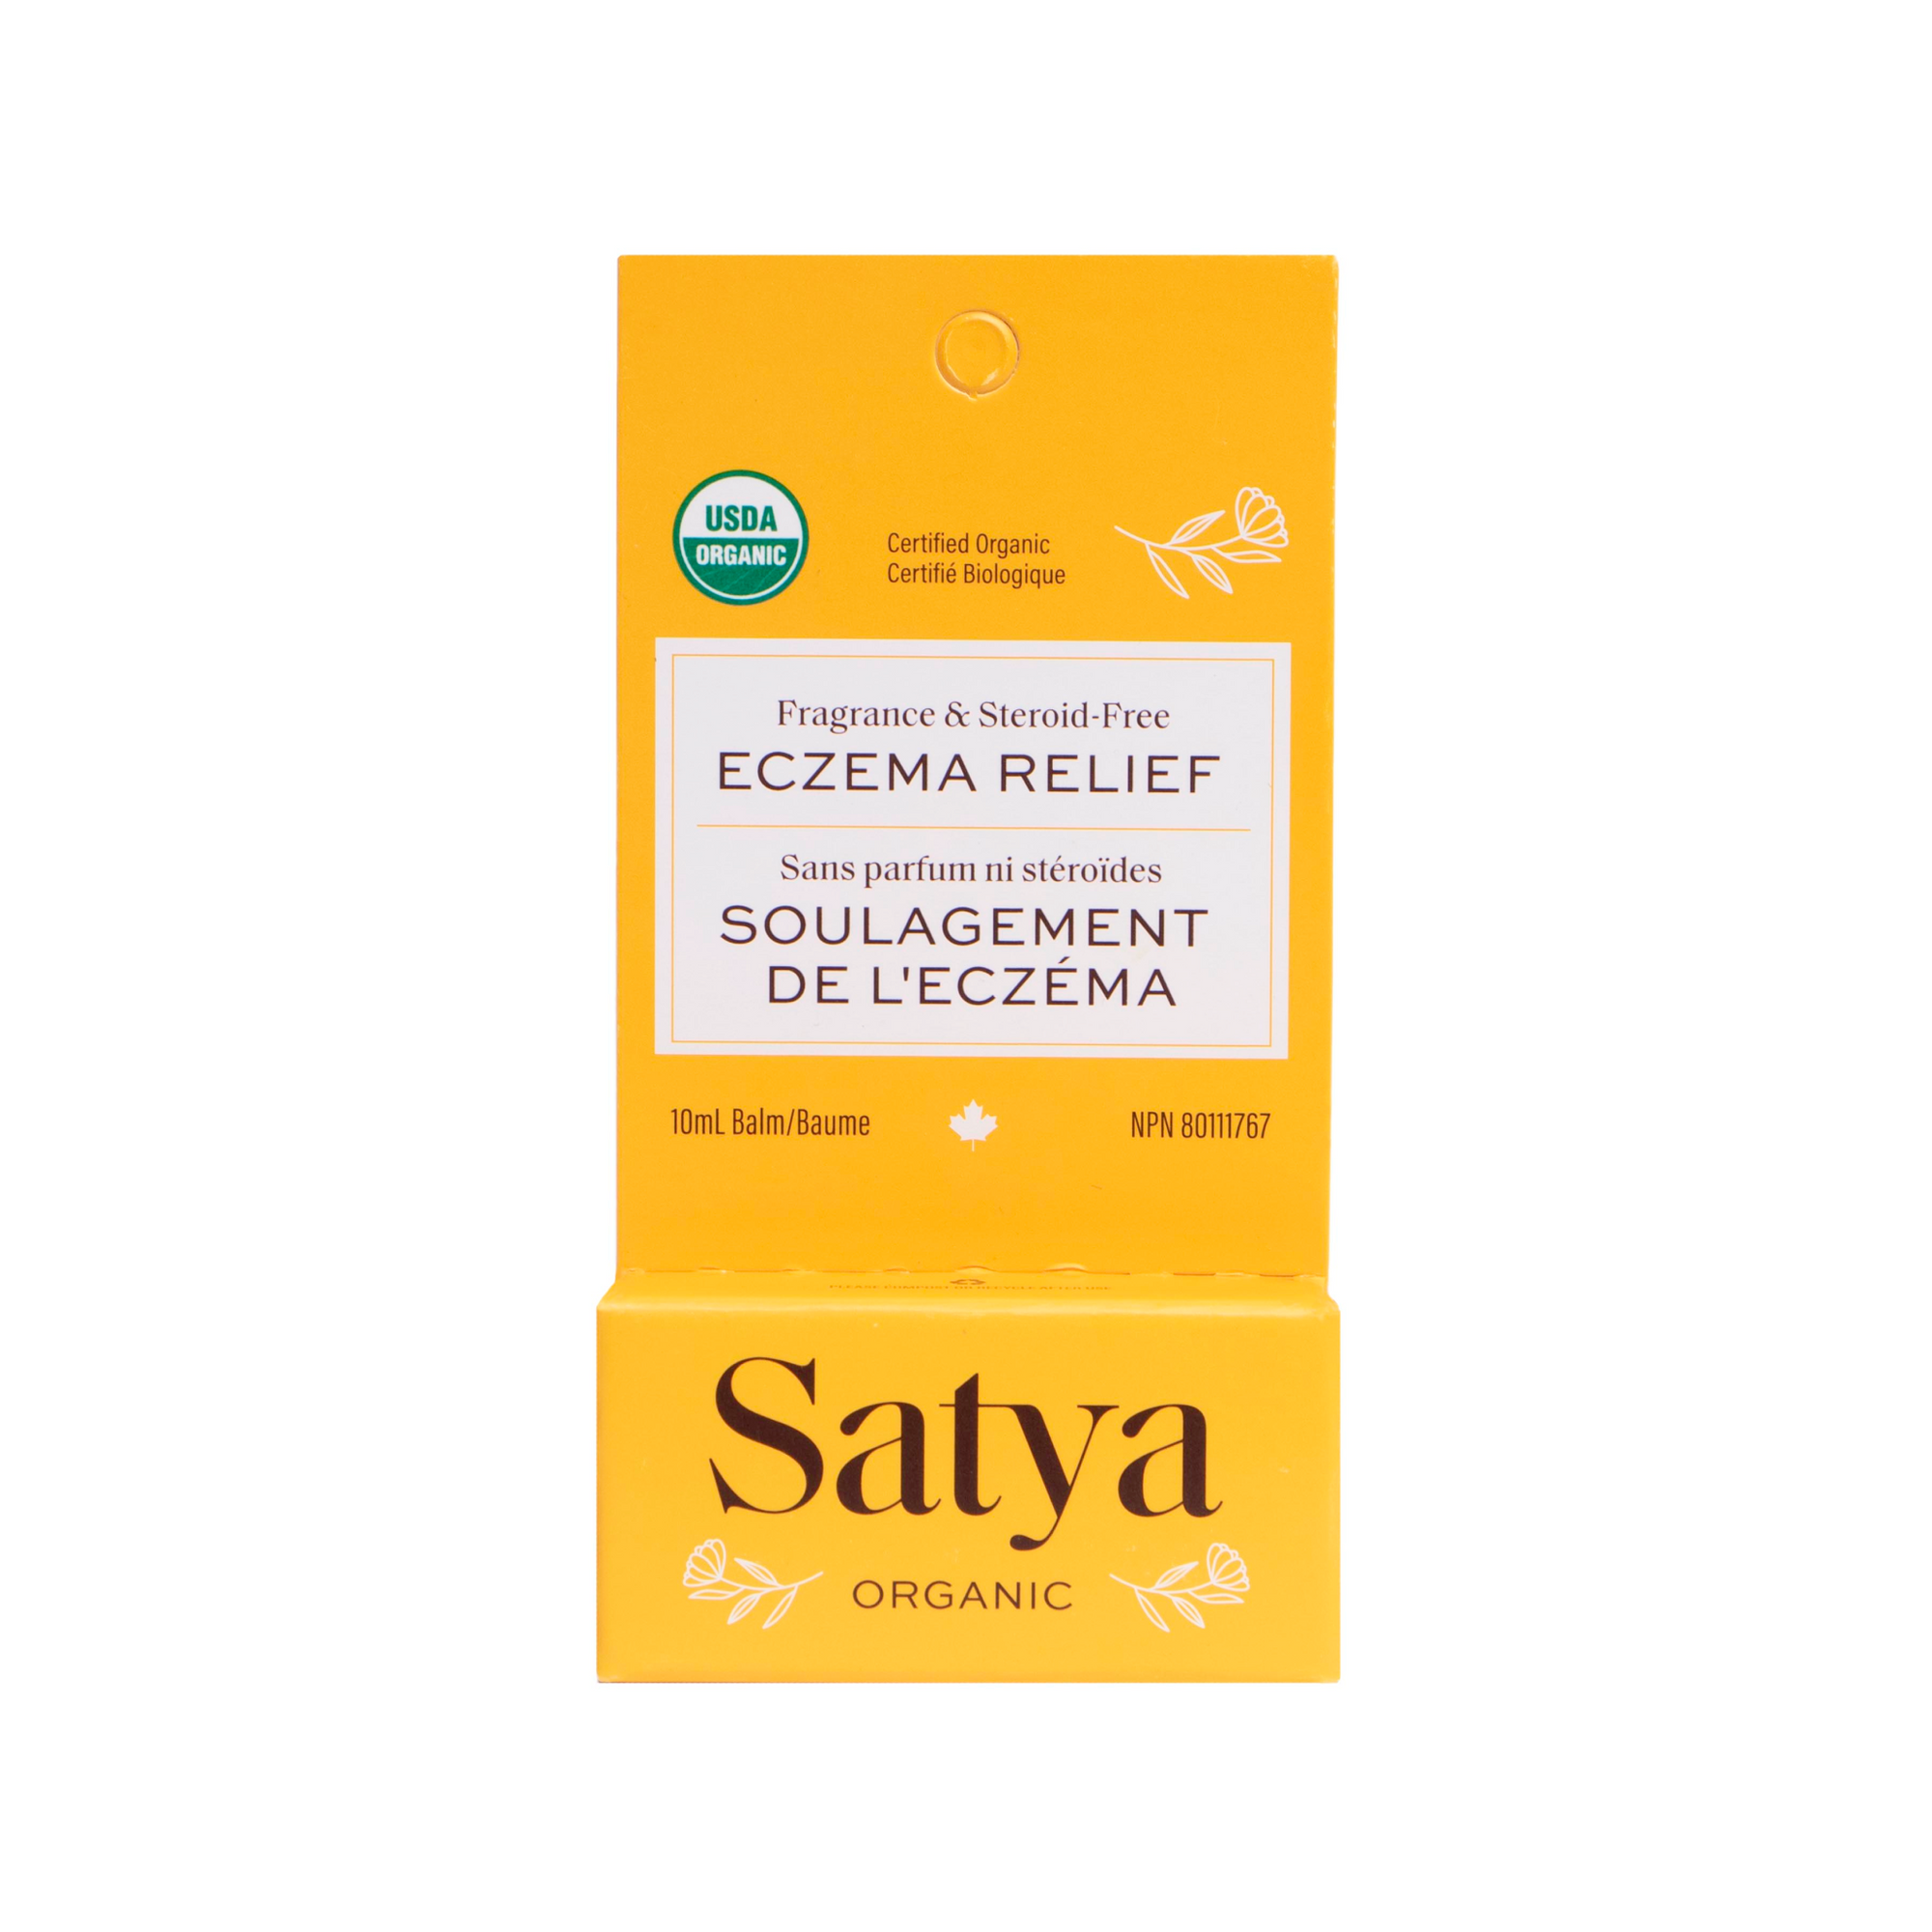 Satya Eczema Relief balm, 10ml tin